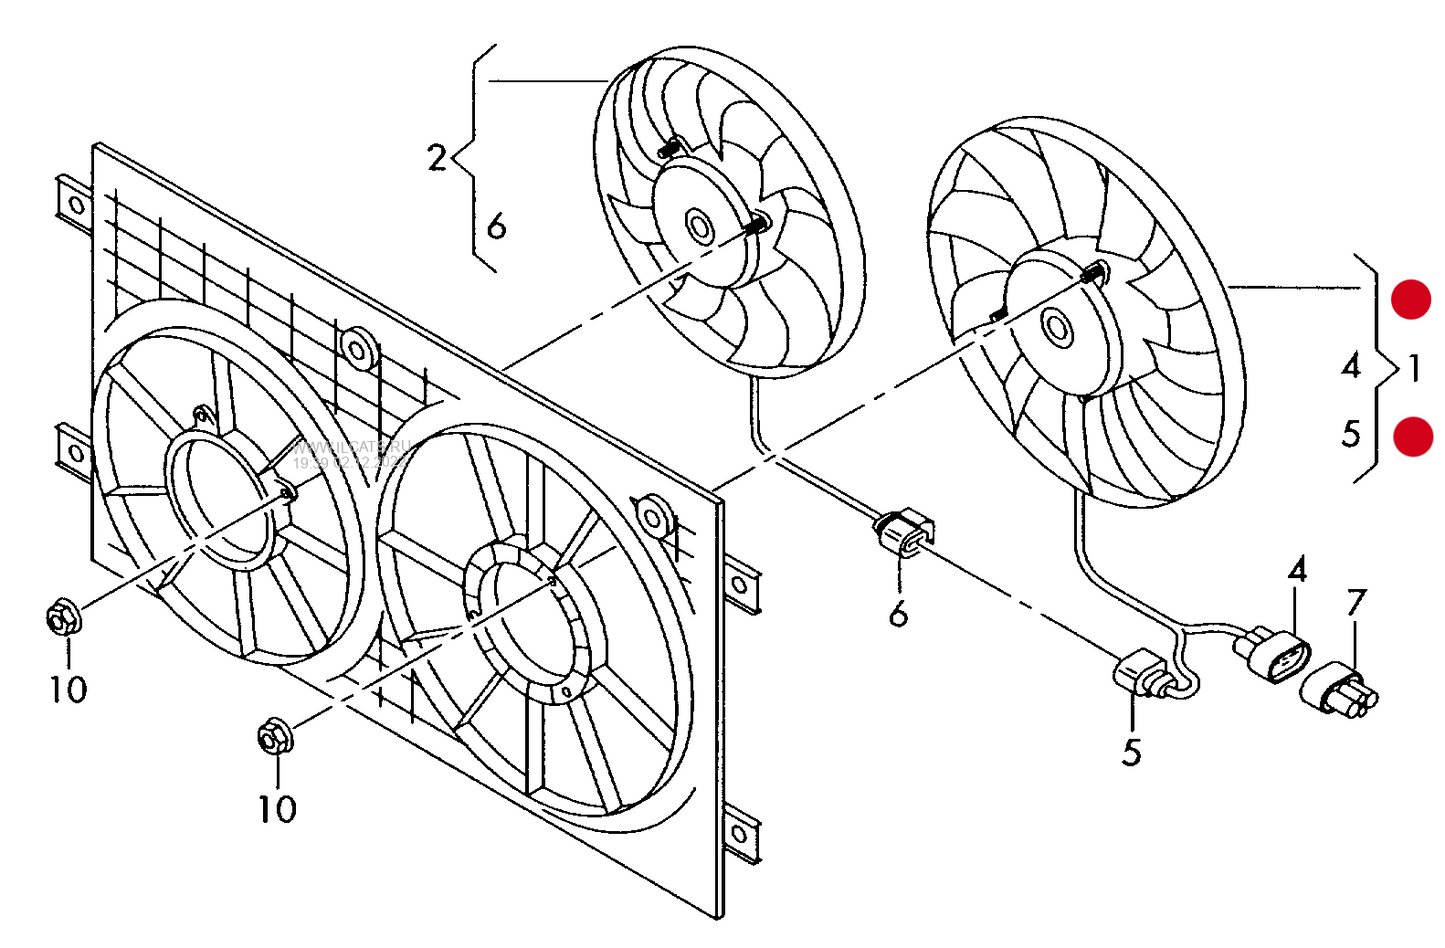 (1) 111282 MAHLE Radiator fan for vehicle use in warm climates 220W 360MM TEMIC/BROSE PR-8Z6,8Z9